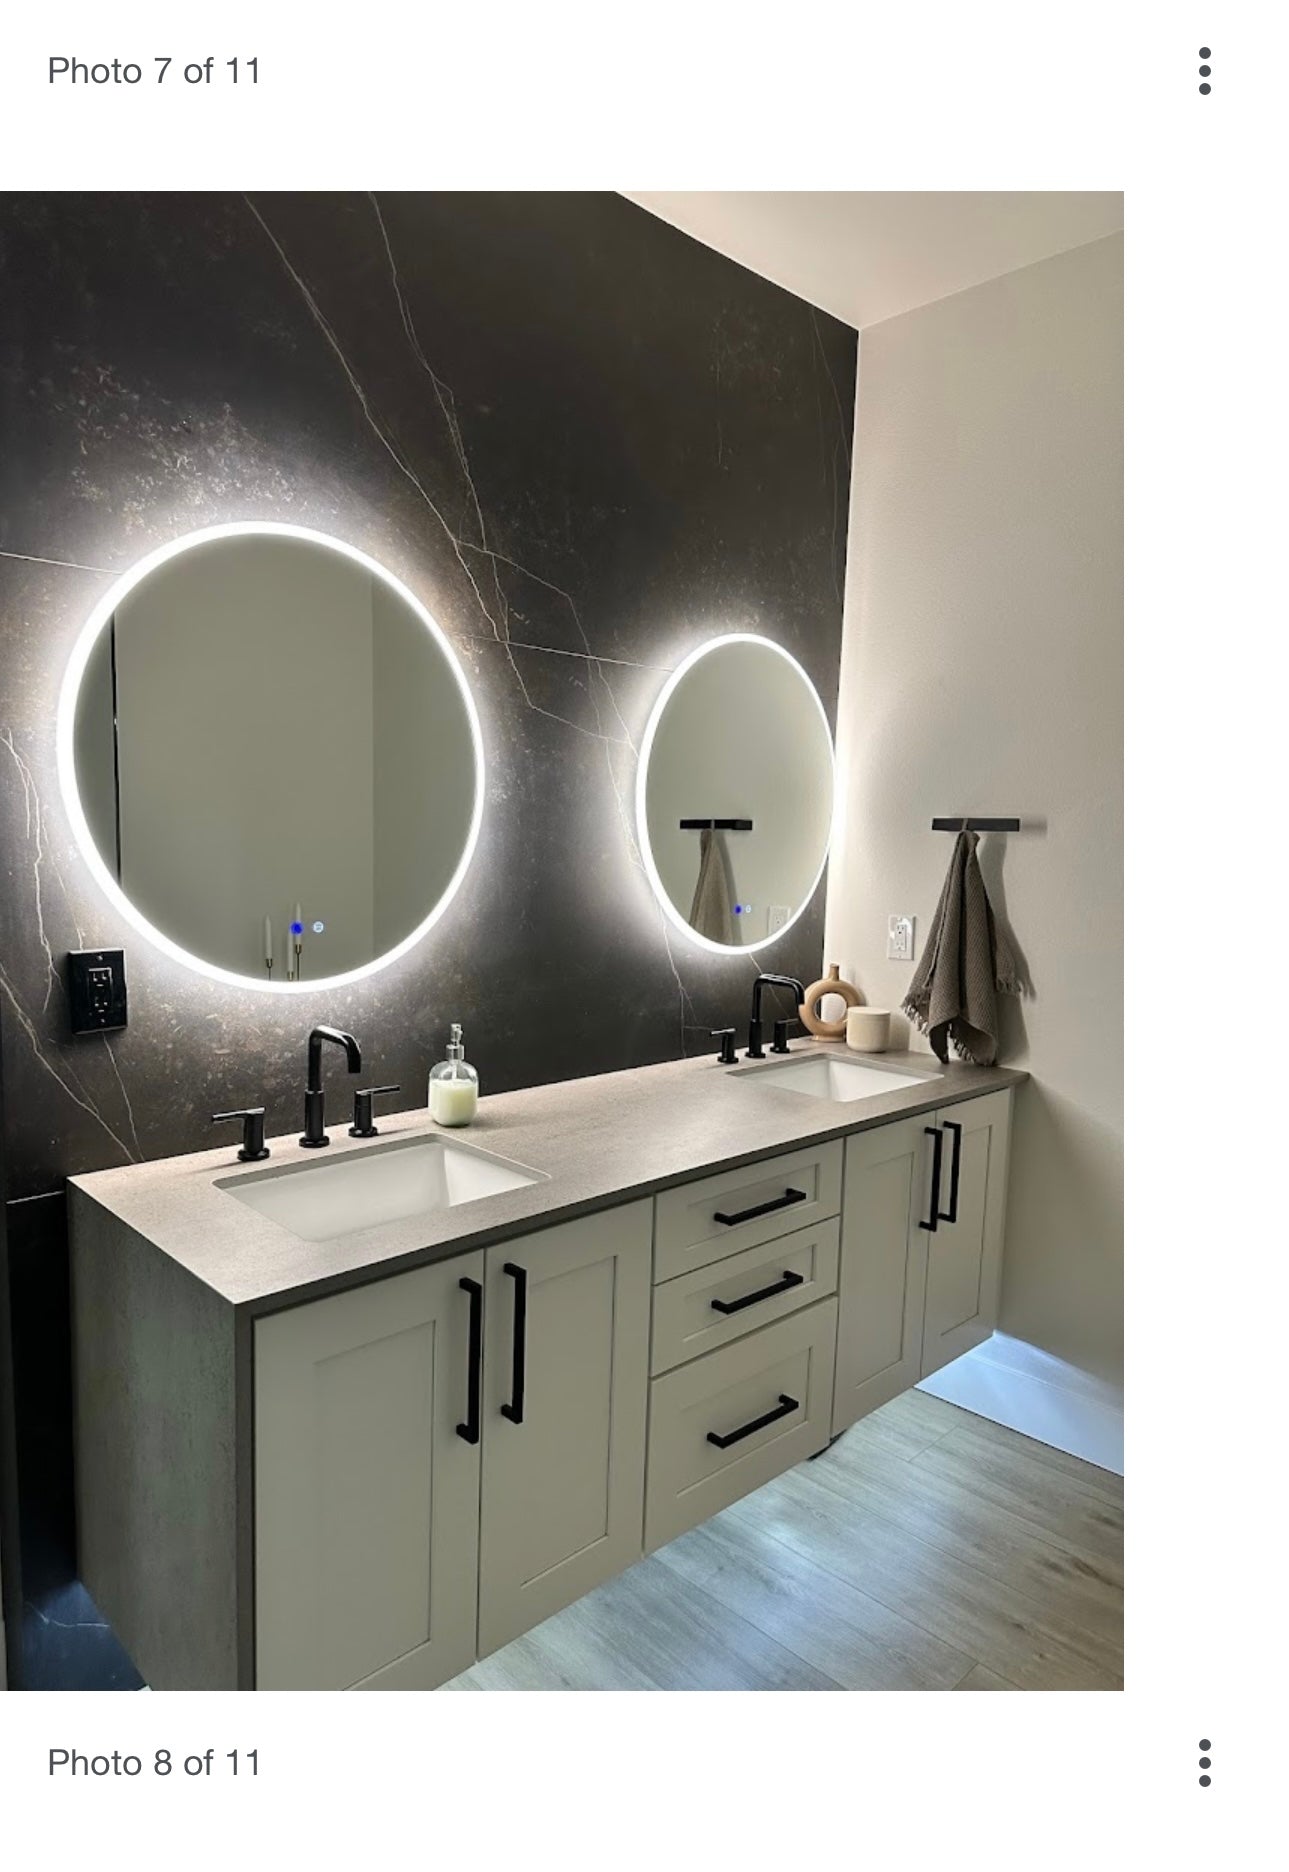 Zeek 30" BackLit LED Round Bathroom Wall Mirror MARD30